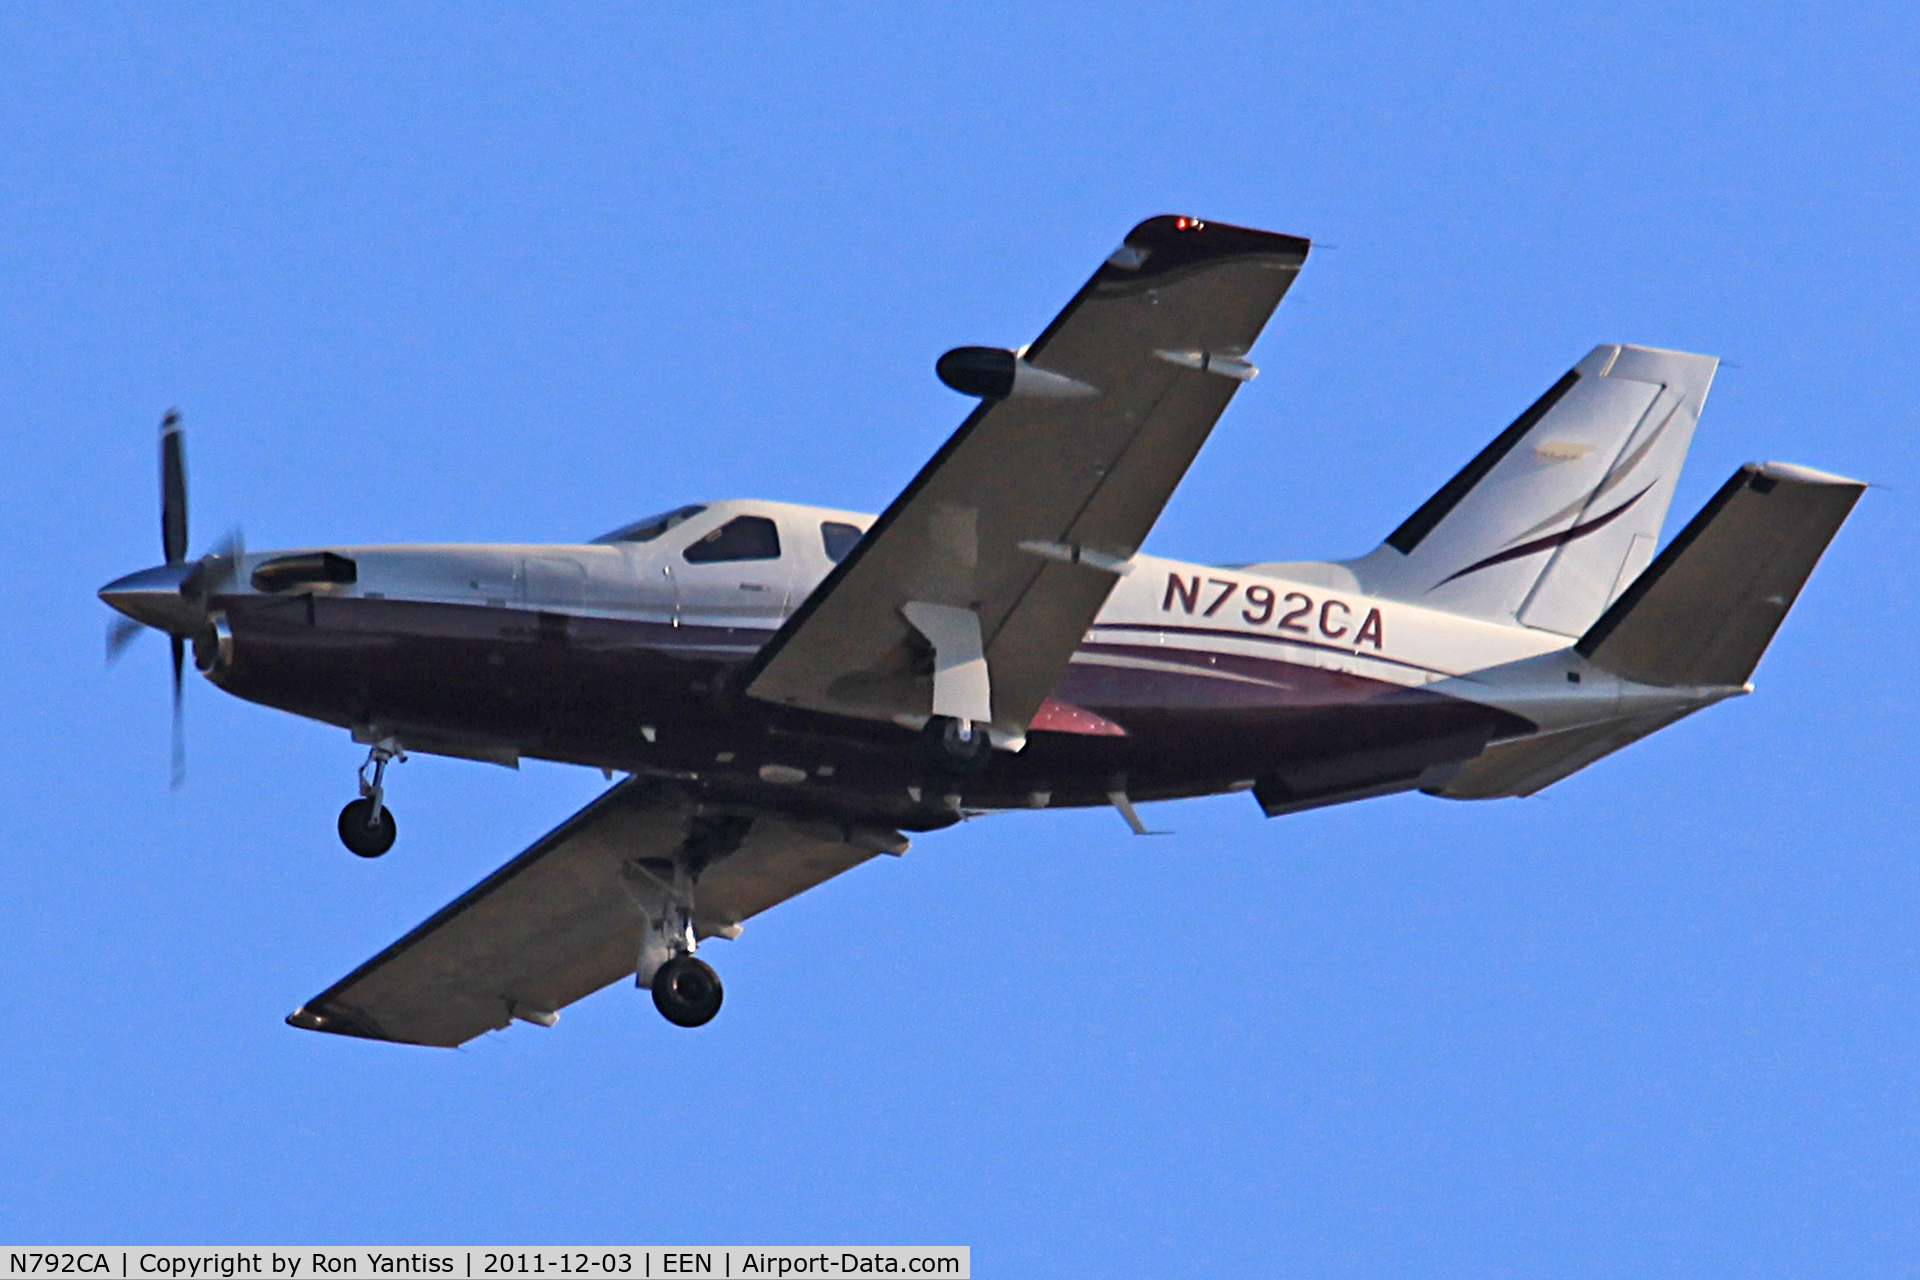 N792CA, 2003 Socata TBM-700 C/N 285, Straight in short final, runway 02, Dillant-Hopkins Airport, Keene, NH